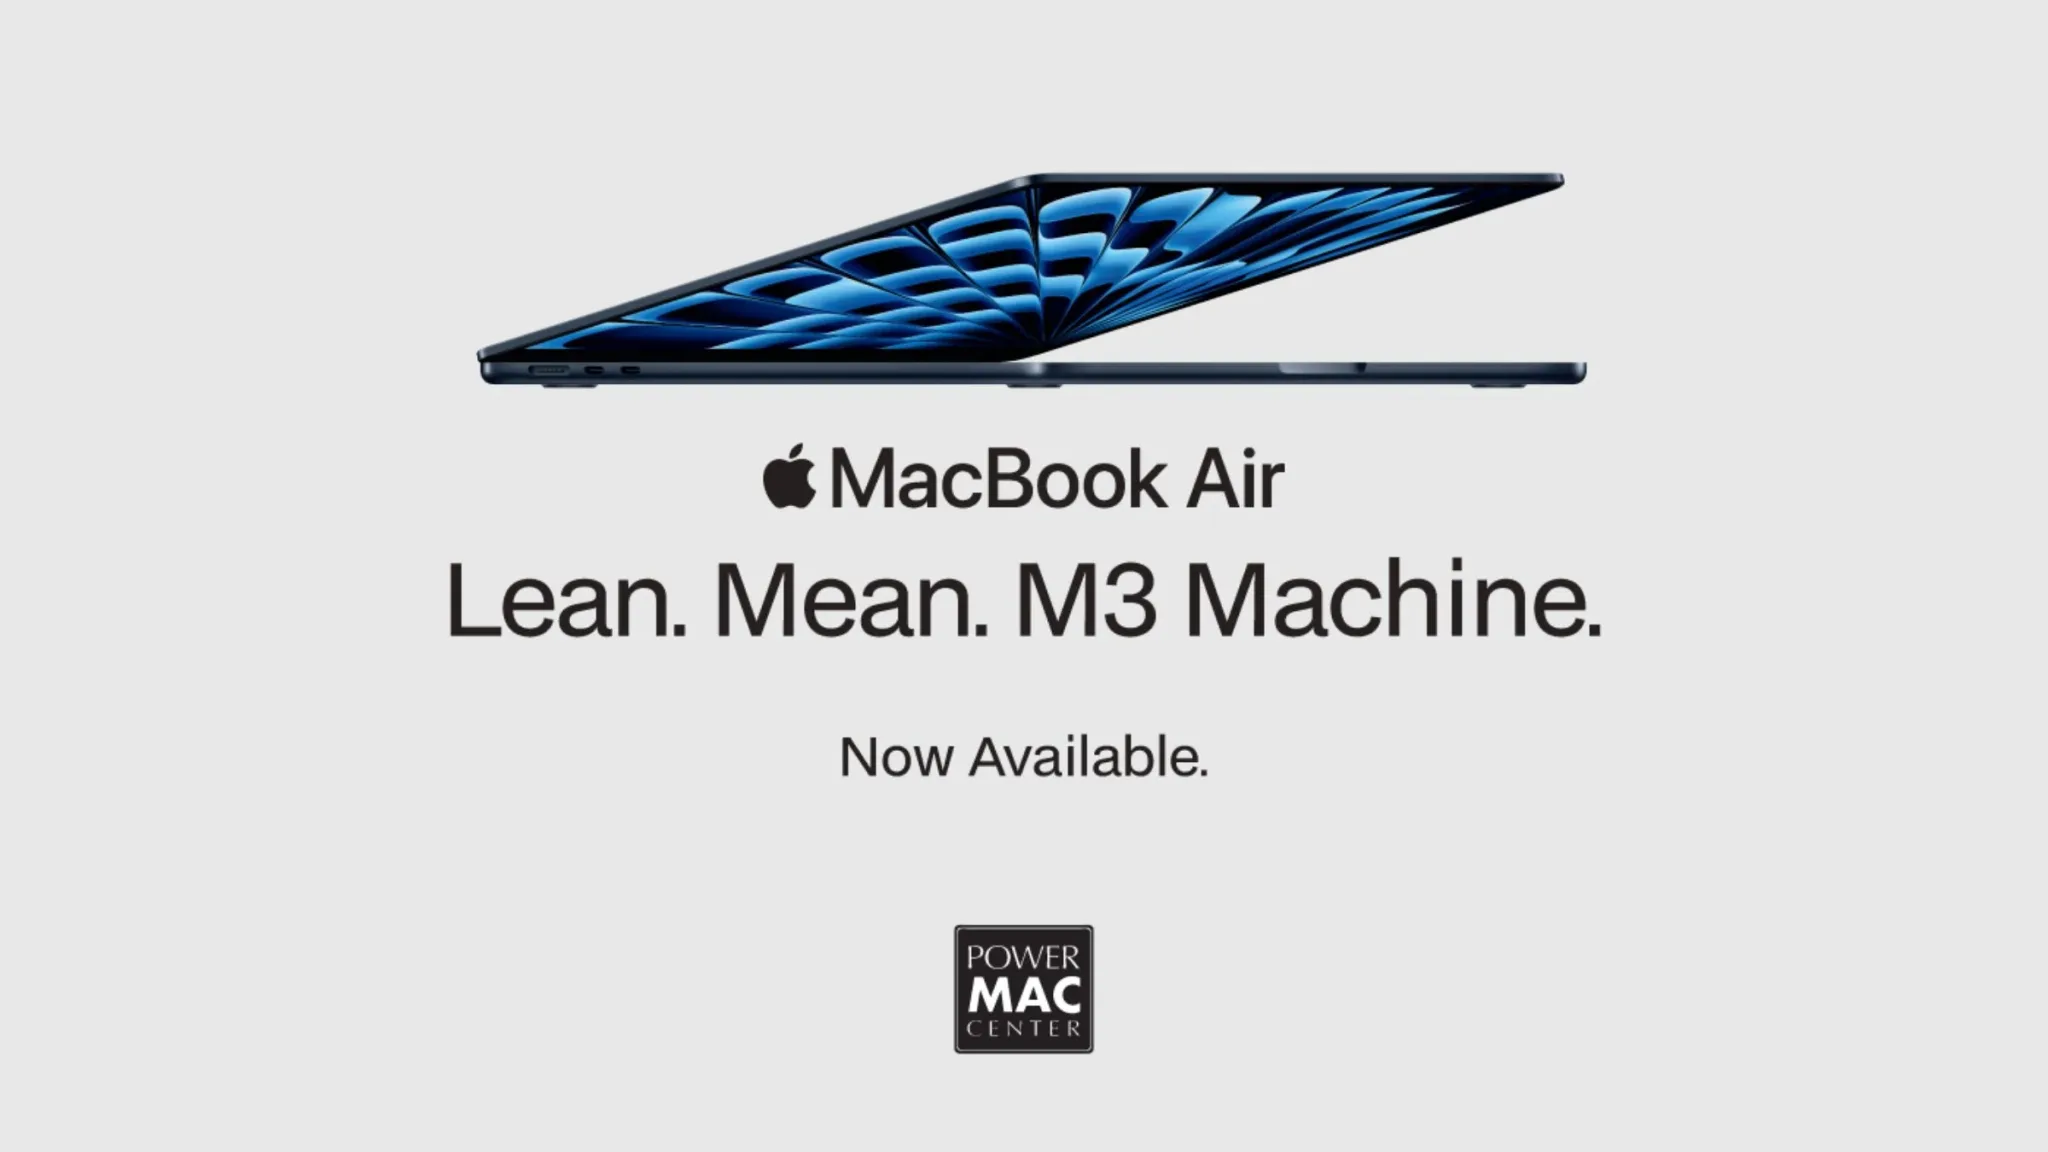 M3 MacBook Air Power Mac Center Header